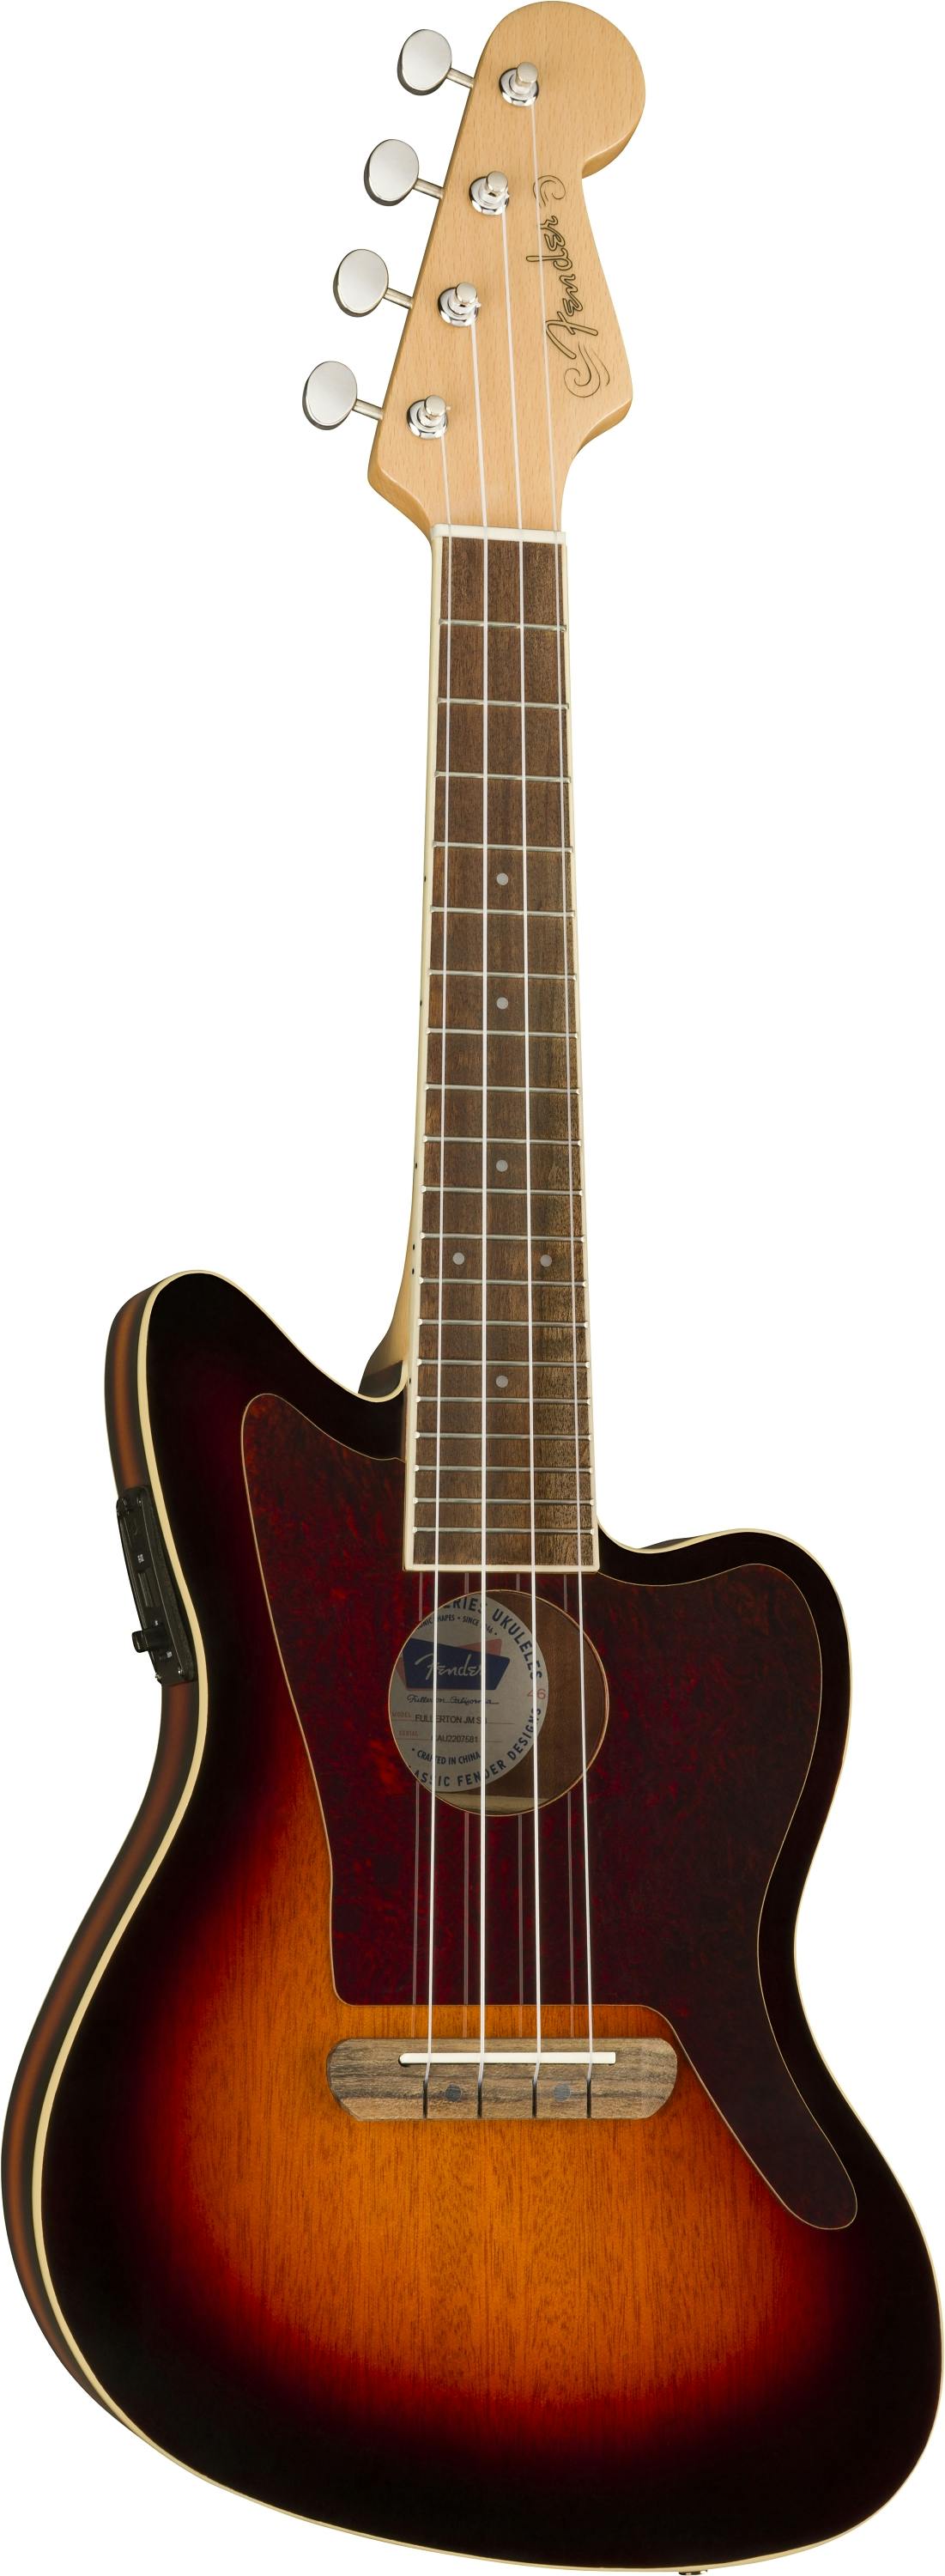 Fender Fullerton Jazzmaster Ukulule in 3-Colour Sunburst